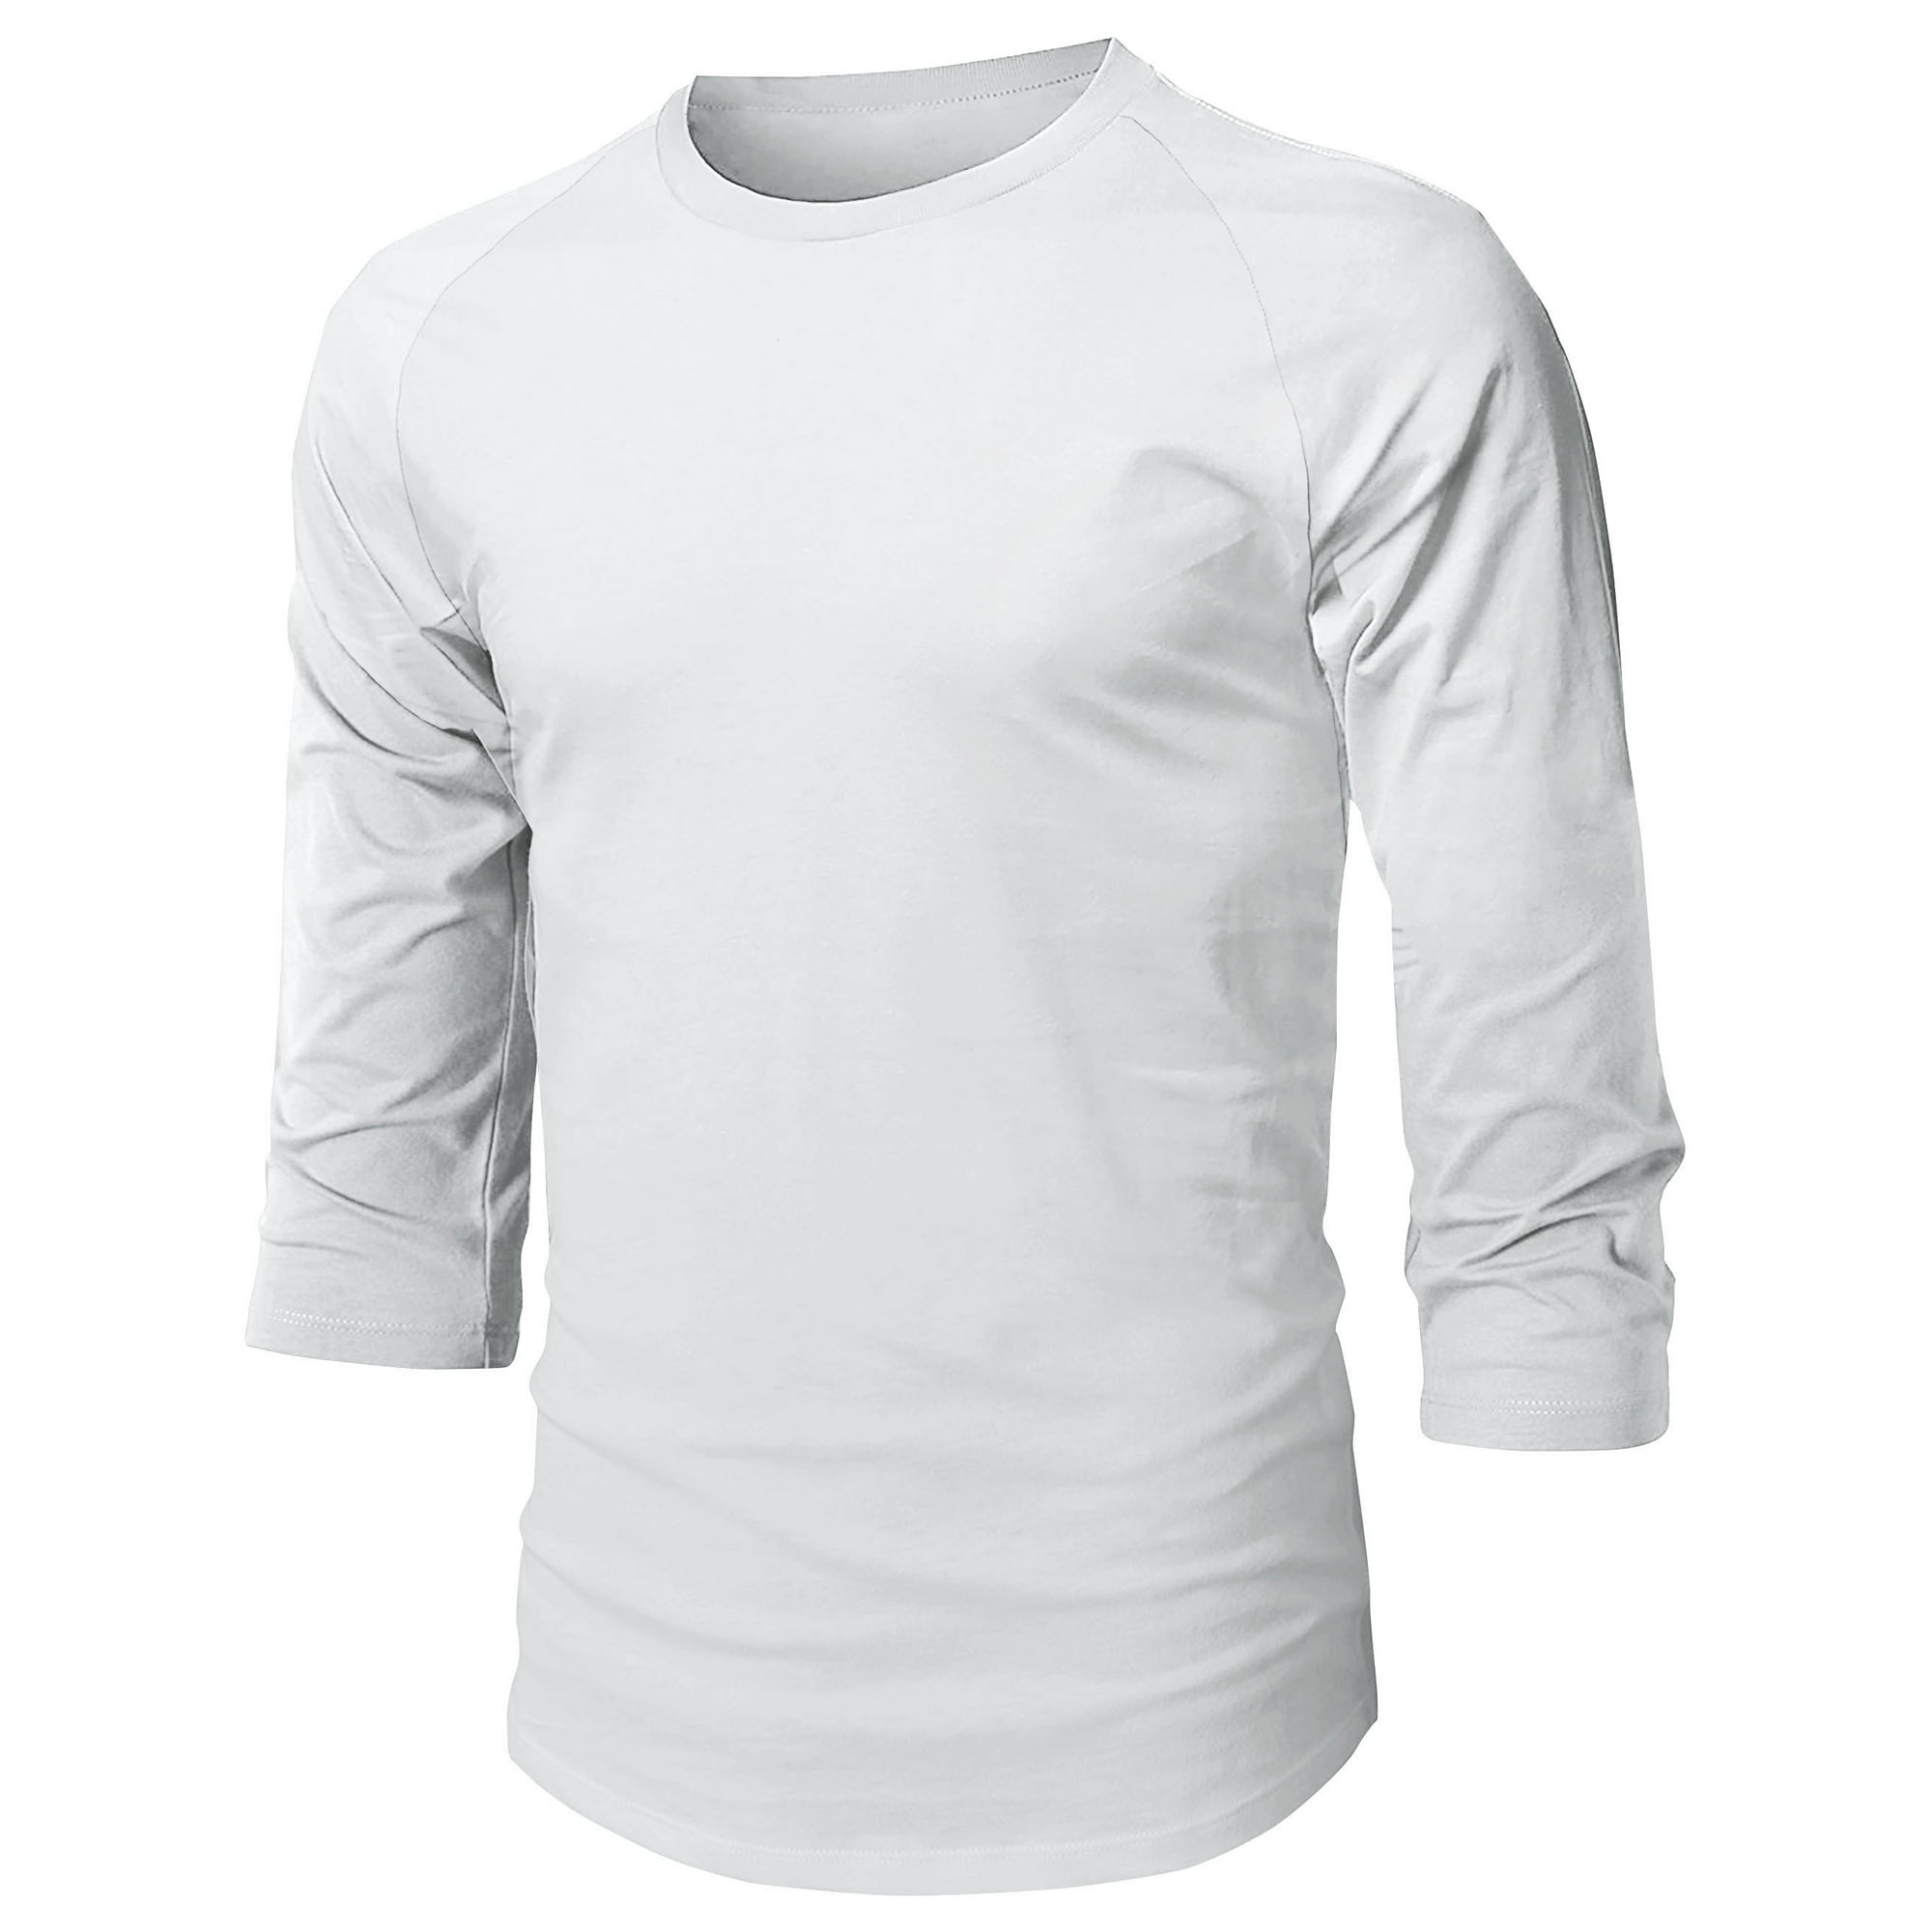 jeg er glad terrasse mangfoldighed Ma Croix Super Soft Mens 3/4 Sleeve Baseball T Shirt Jersey Fitted Top -  Walmart.com